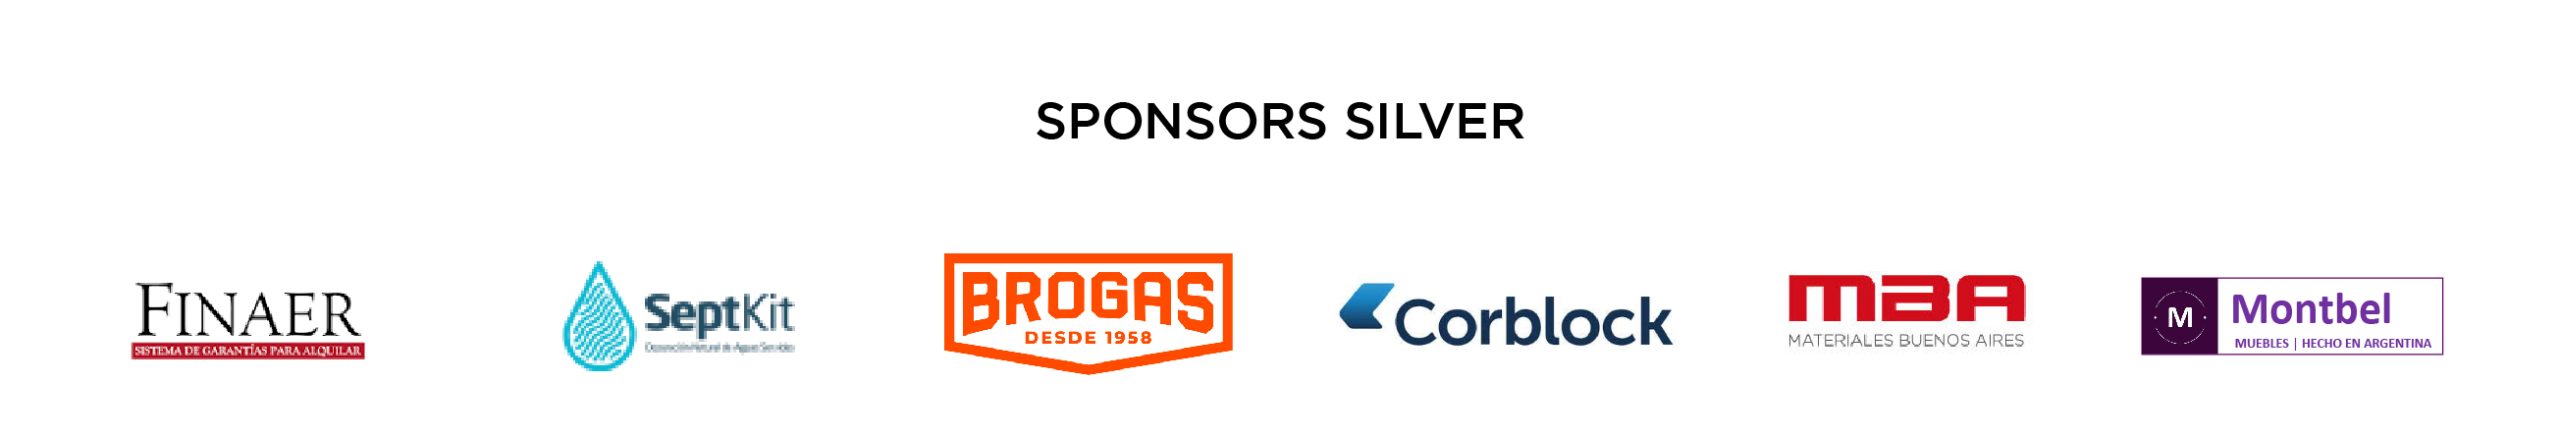 sponsors24-07